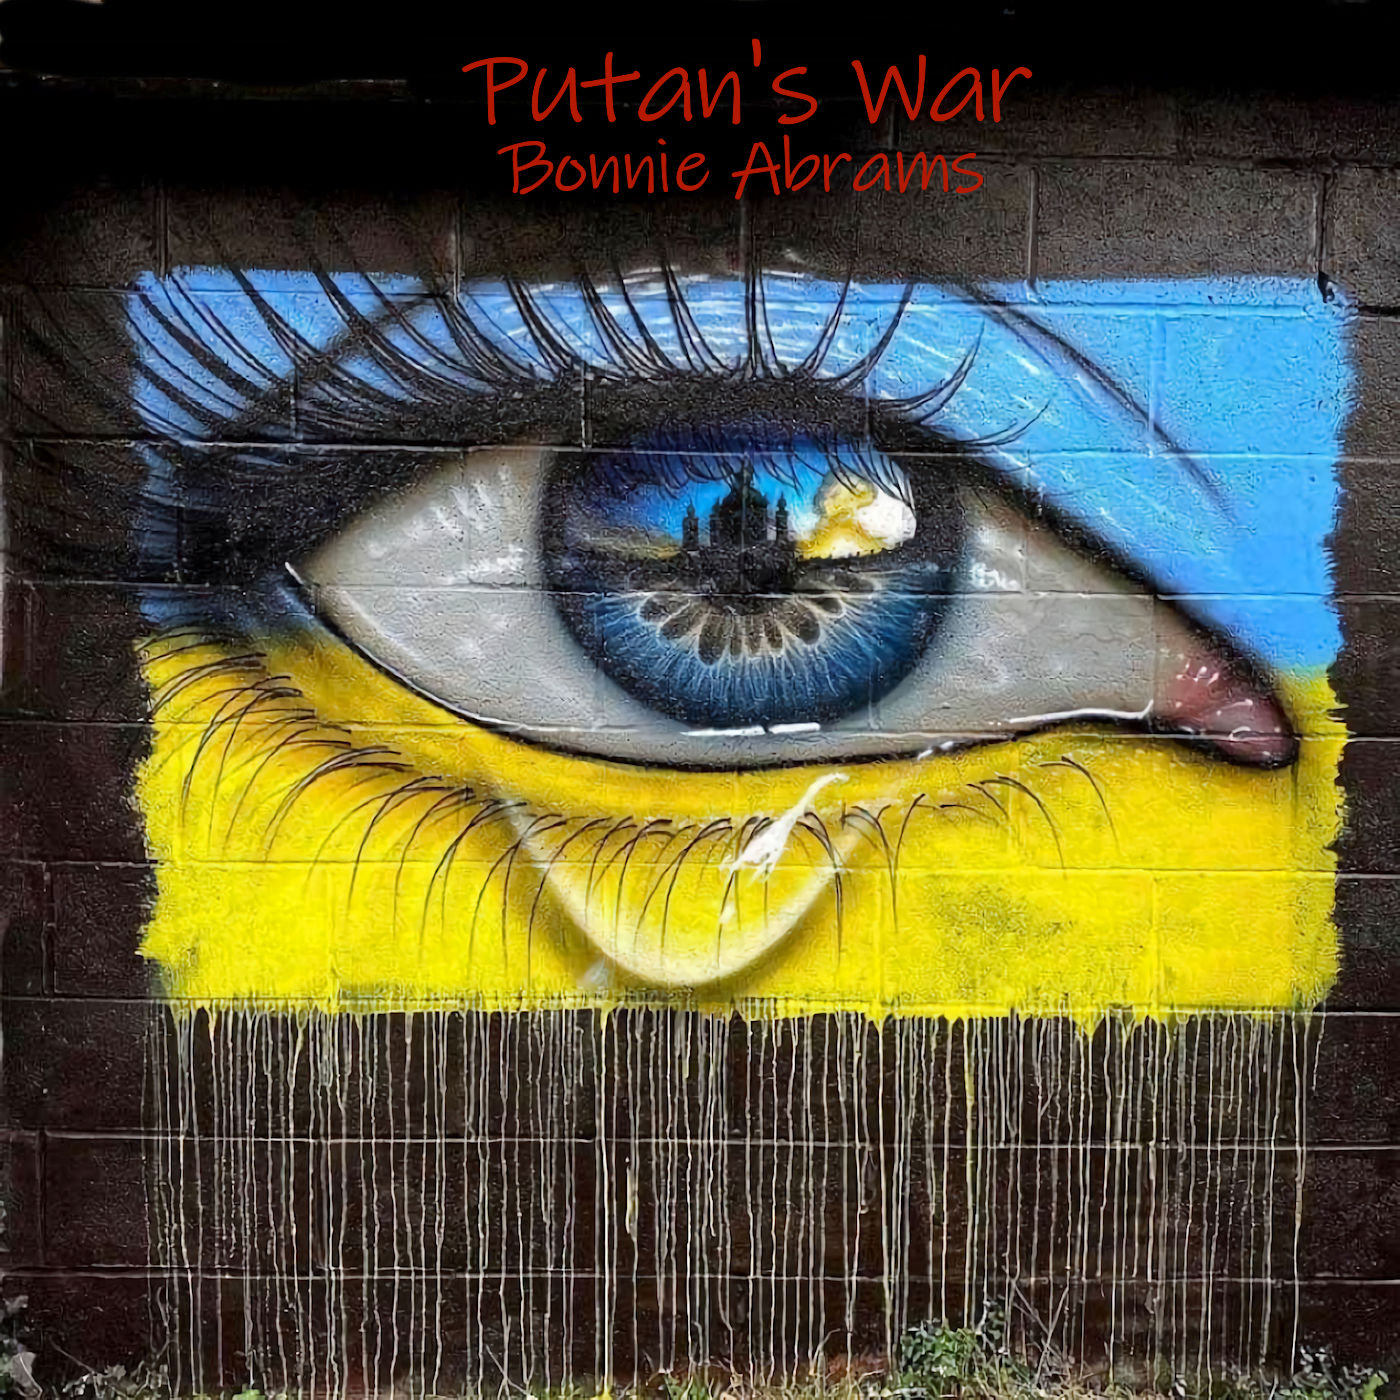 Art for Putin's War - Speech by Bonnie Abrams and Paulius klimus